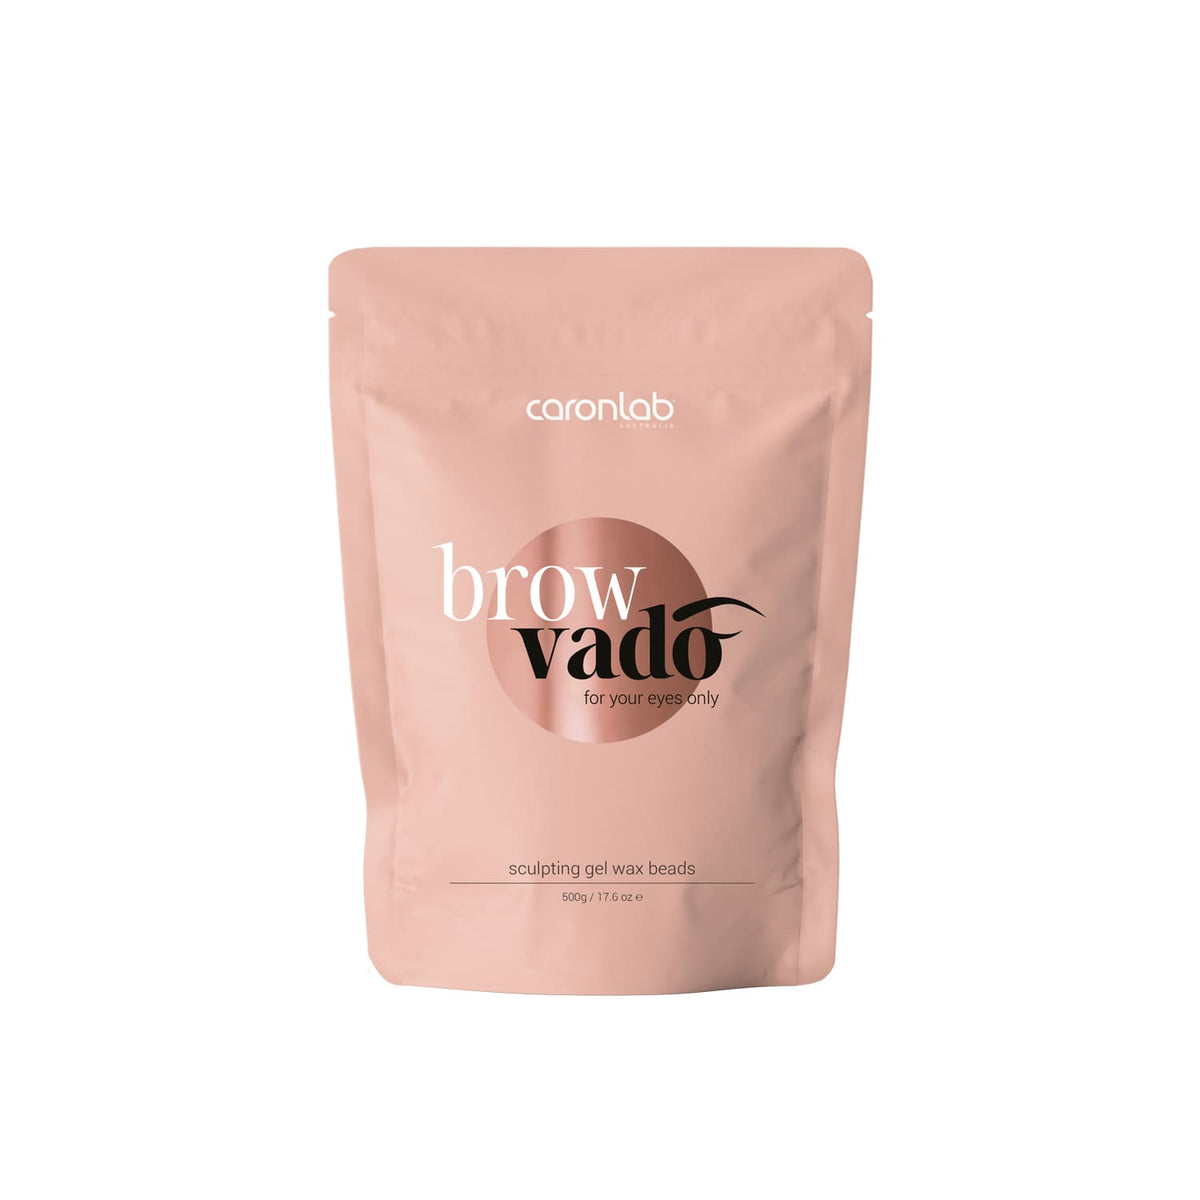 CARONLAB - BROWVADO GEL WAX BEADS - 500g - Luna Beauty Supplies